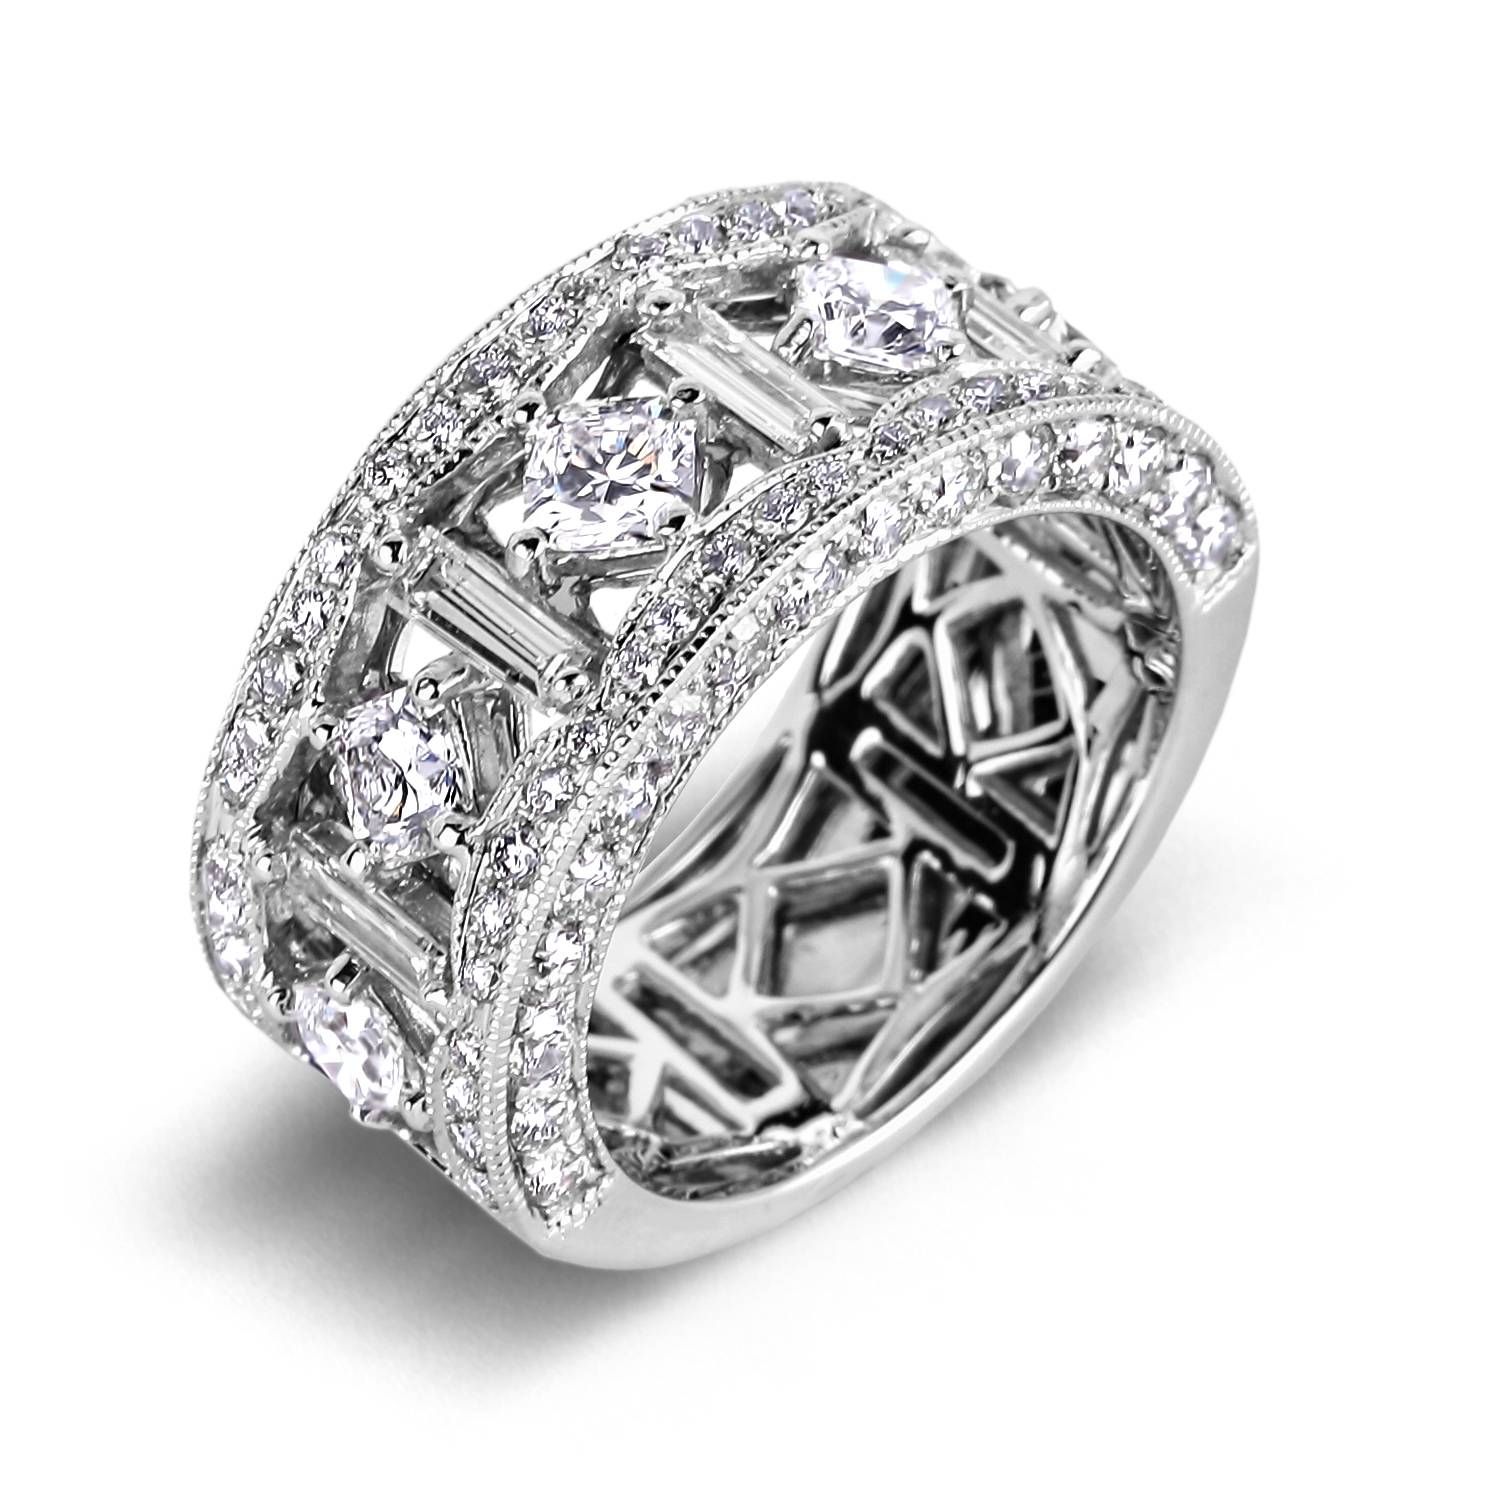 Wedding Anniversary Rings Diamonds | Wedding Ideas For Latest 5 Year Wedding Anniversary Rings (View 1 of 25)